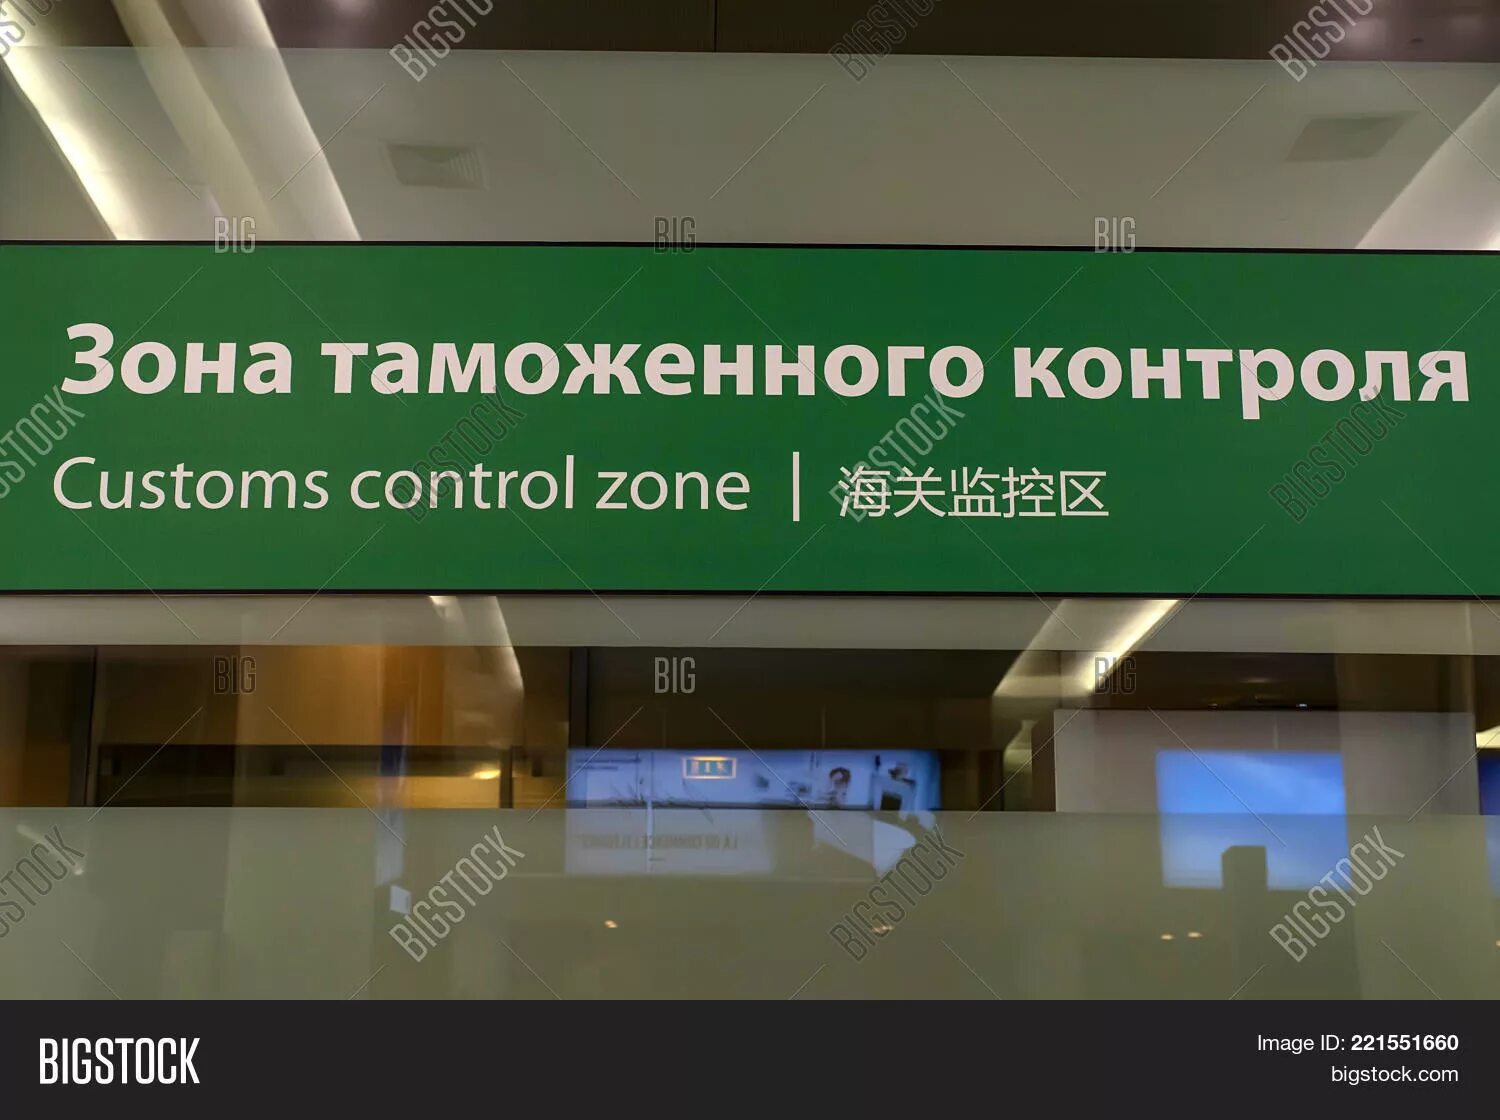 Чайна зона. Зона таможенного контроля. Зона таможенного контроля в аэропорту. Зона таможенного контроля табличка. Зона таможенного контроля в аэропорту Шереметьево.